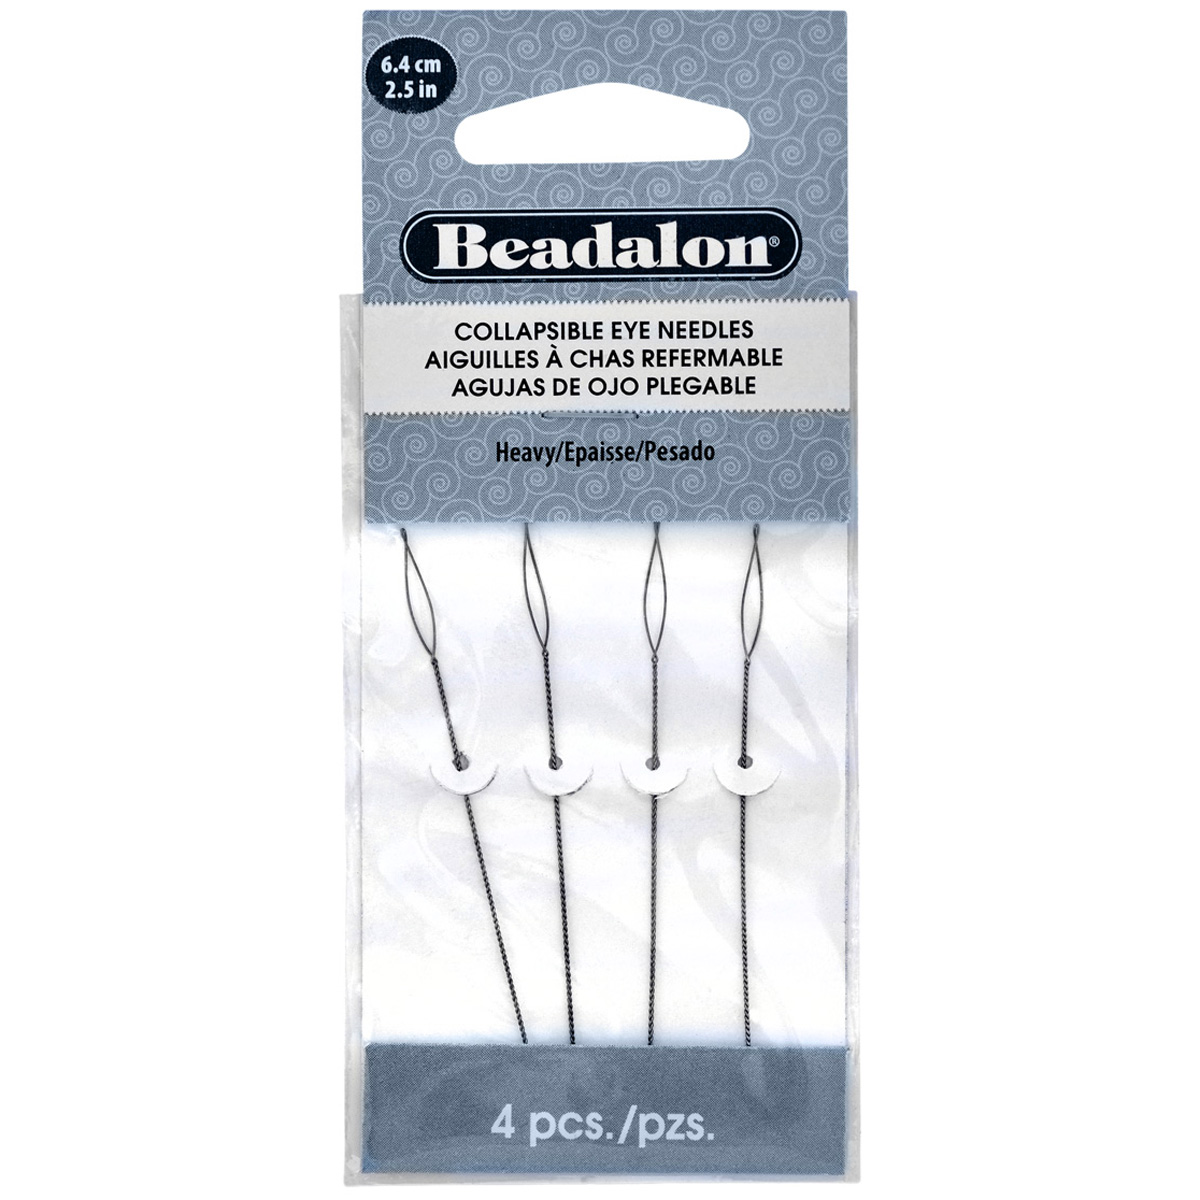 Where To Buy Beadalon Collapsible Eye Needles 88